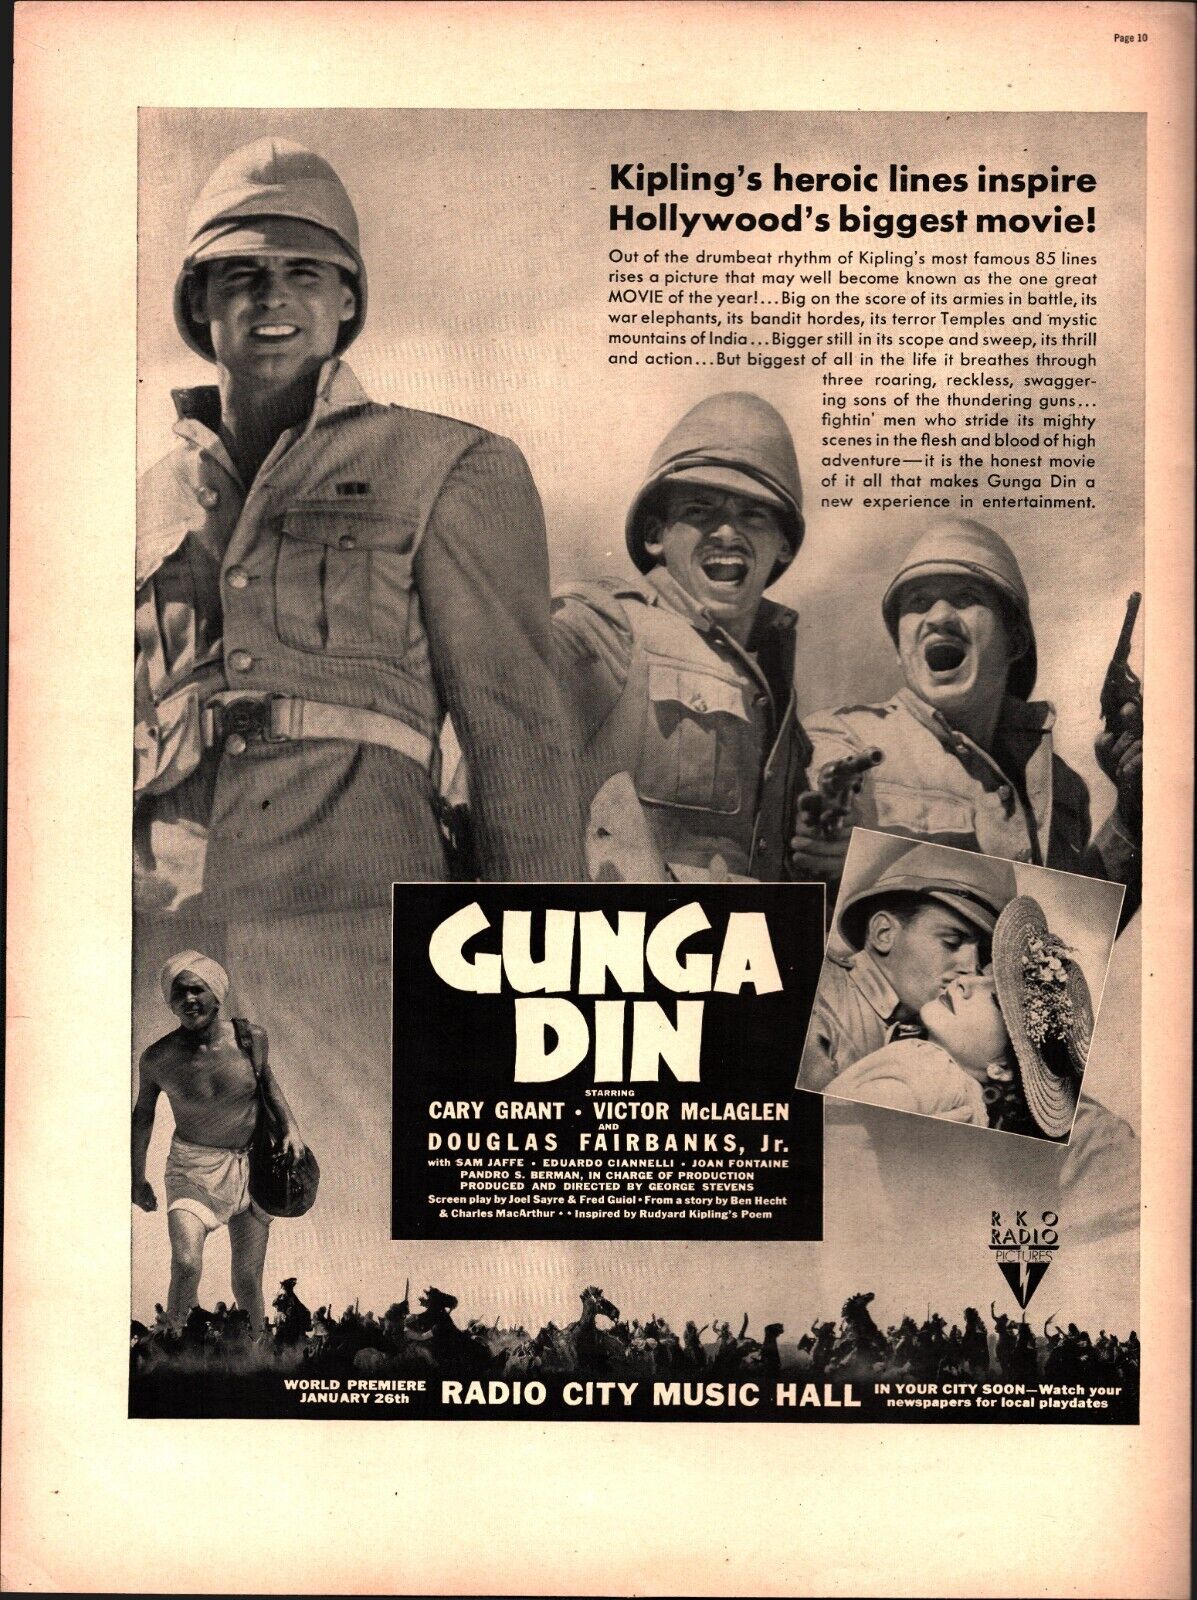 Vintage 1939 “Gunga Din” Film Print Ad - Cary Grant - Victor McLaglen d6